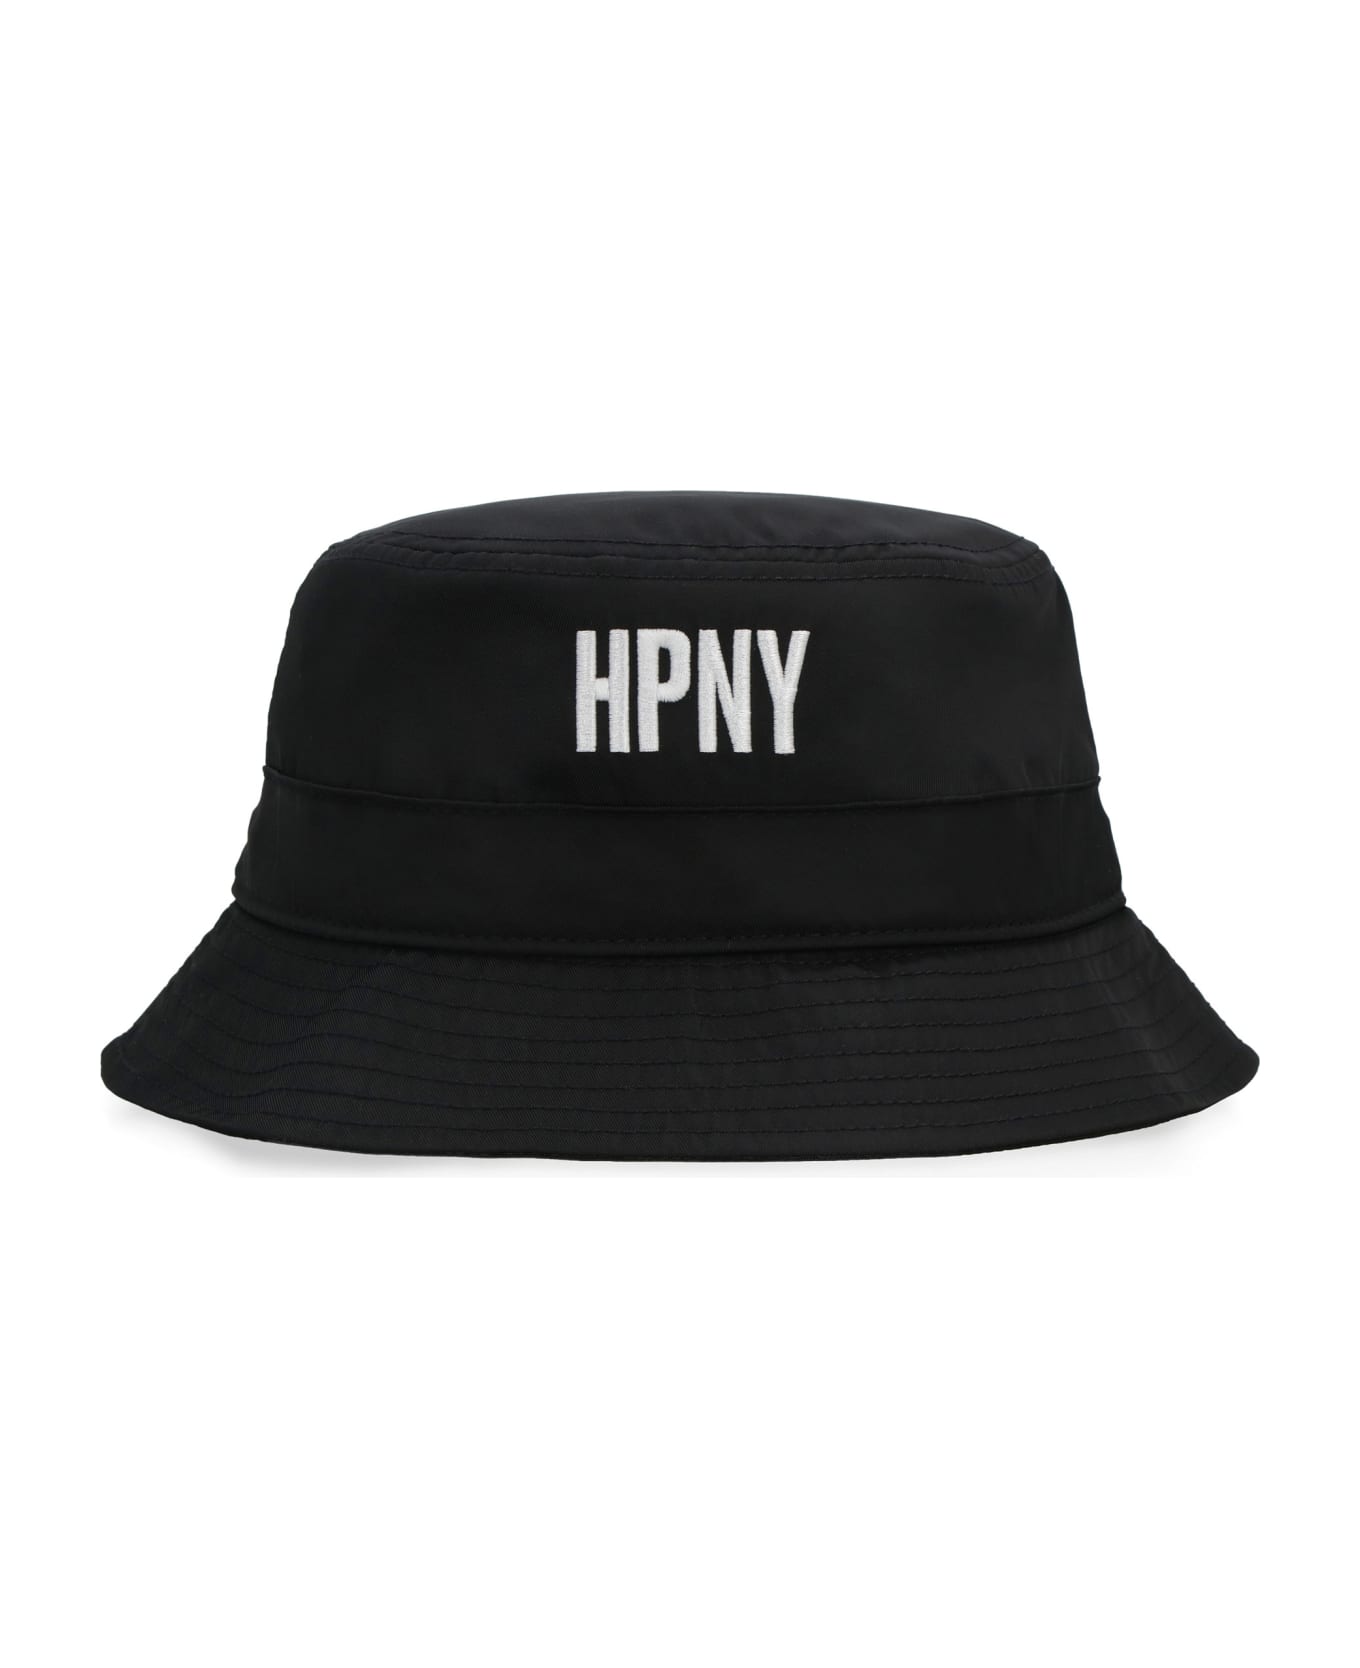 HERON PRESTON Bucket Hat - black